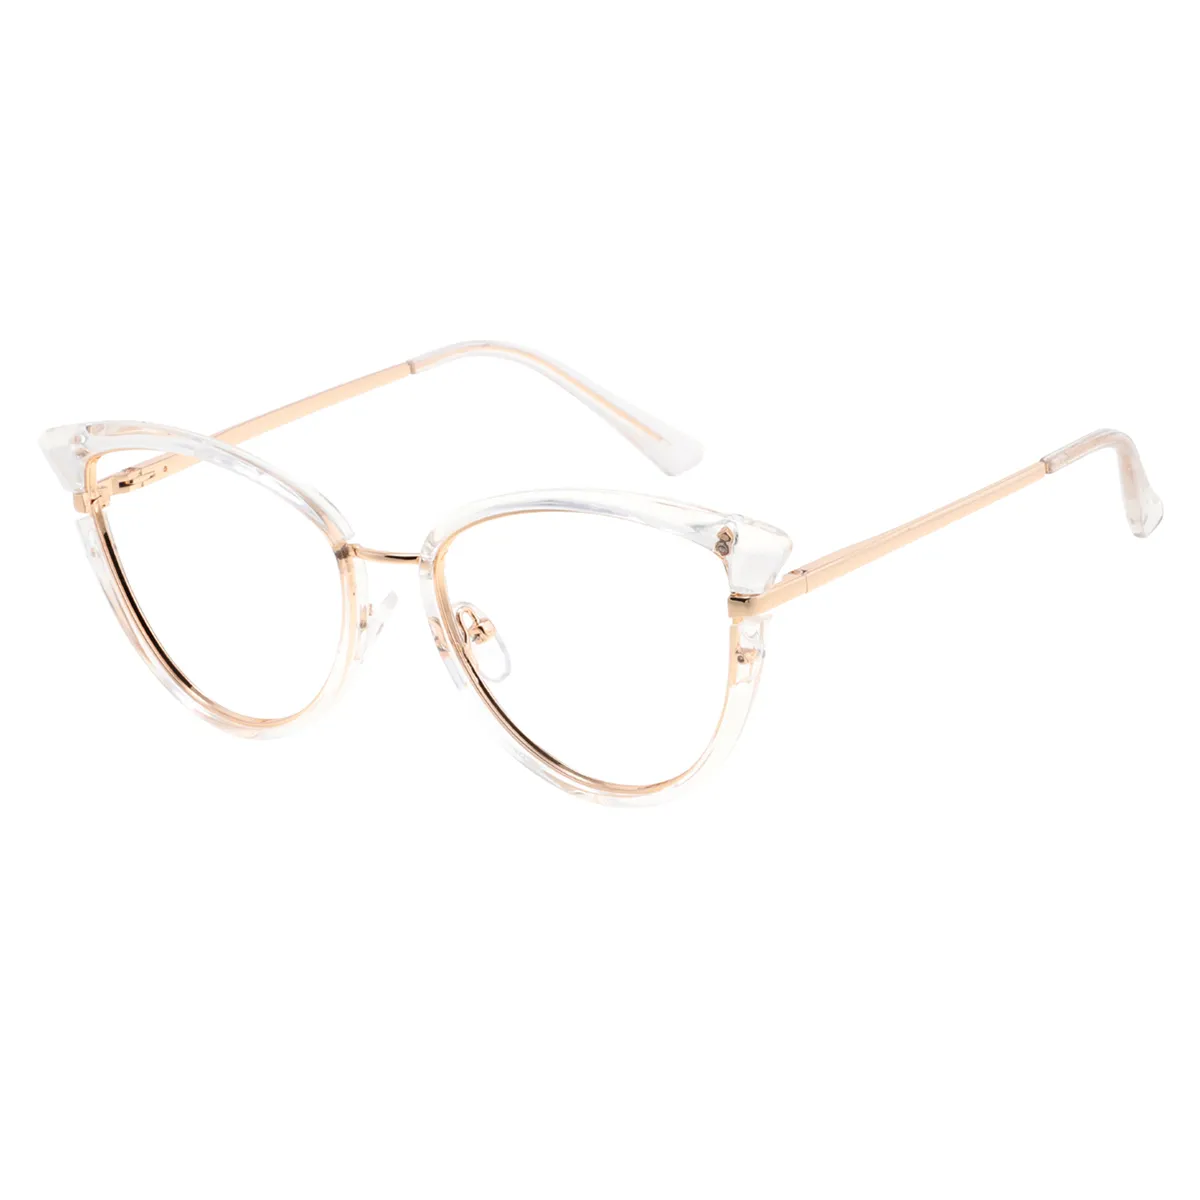 Griffin - Cat-eye Translucent Glasses for Women - EFE